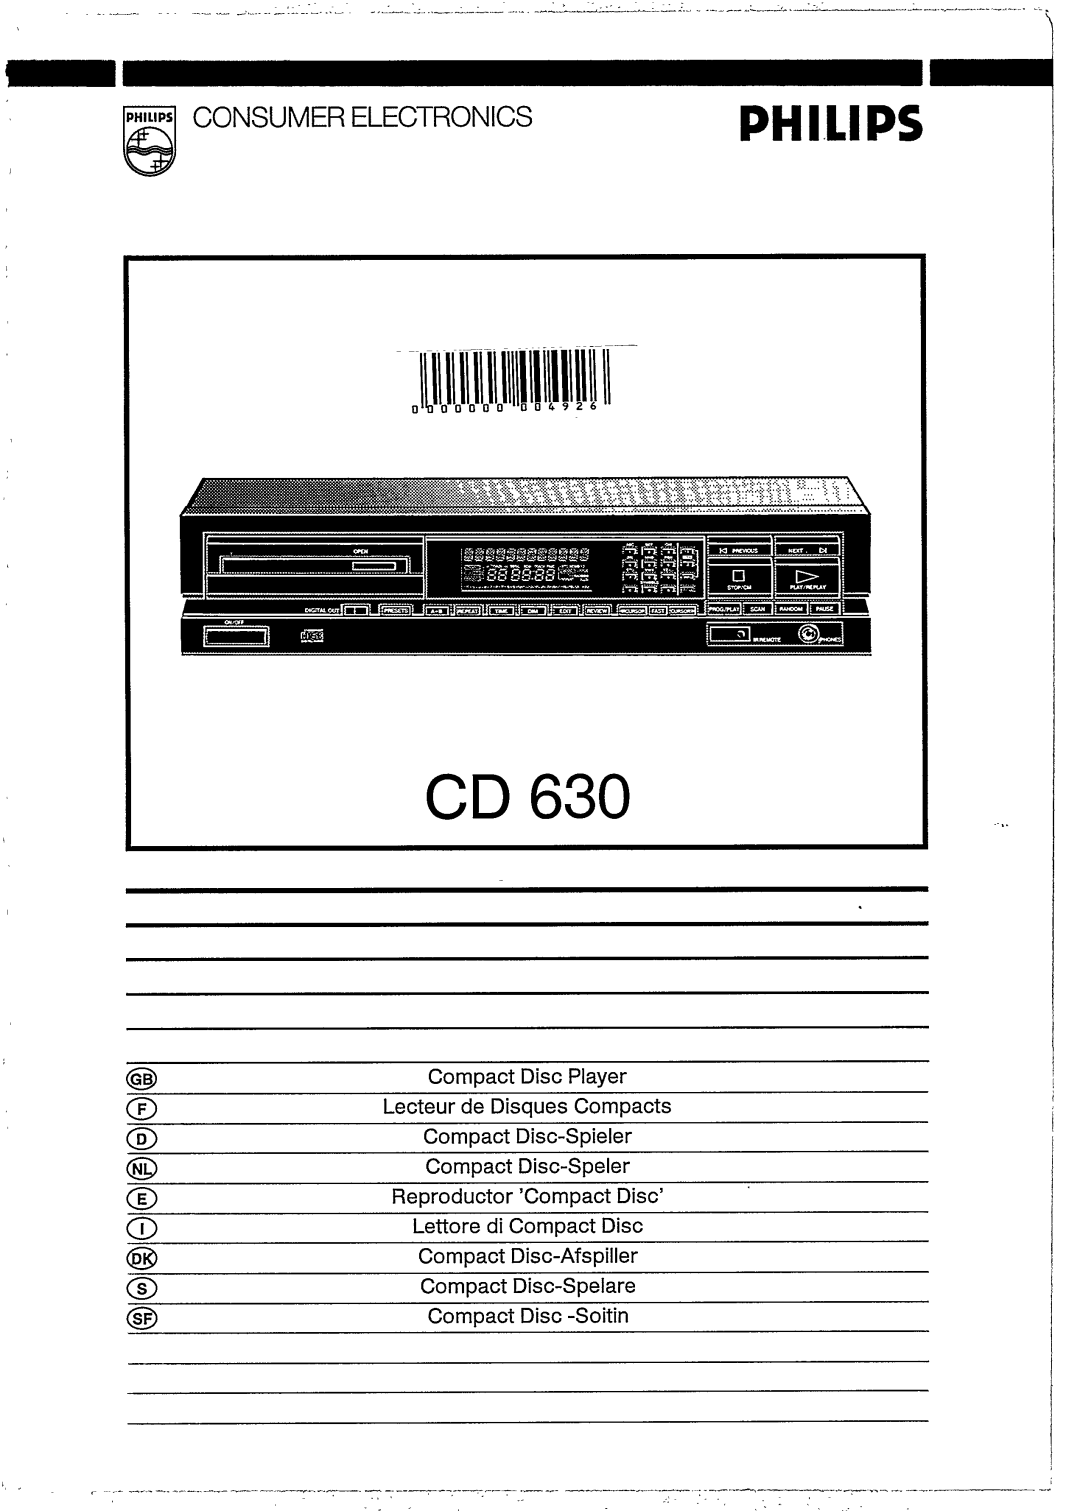 Philips CD 630 manual 